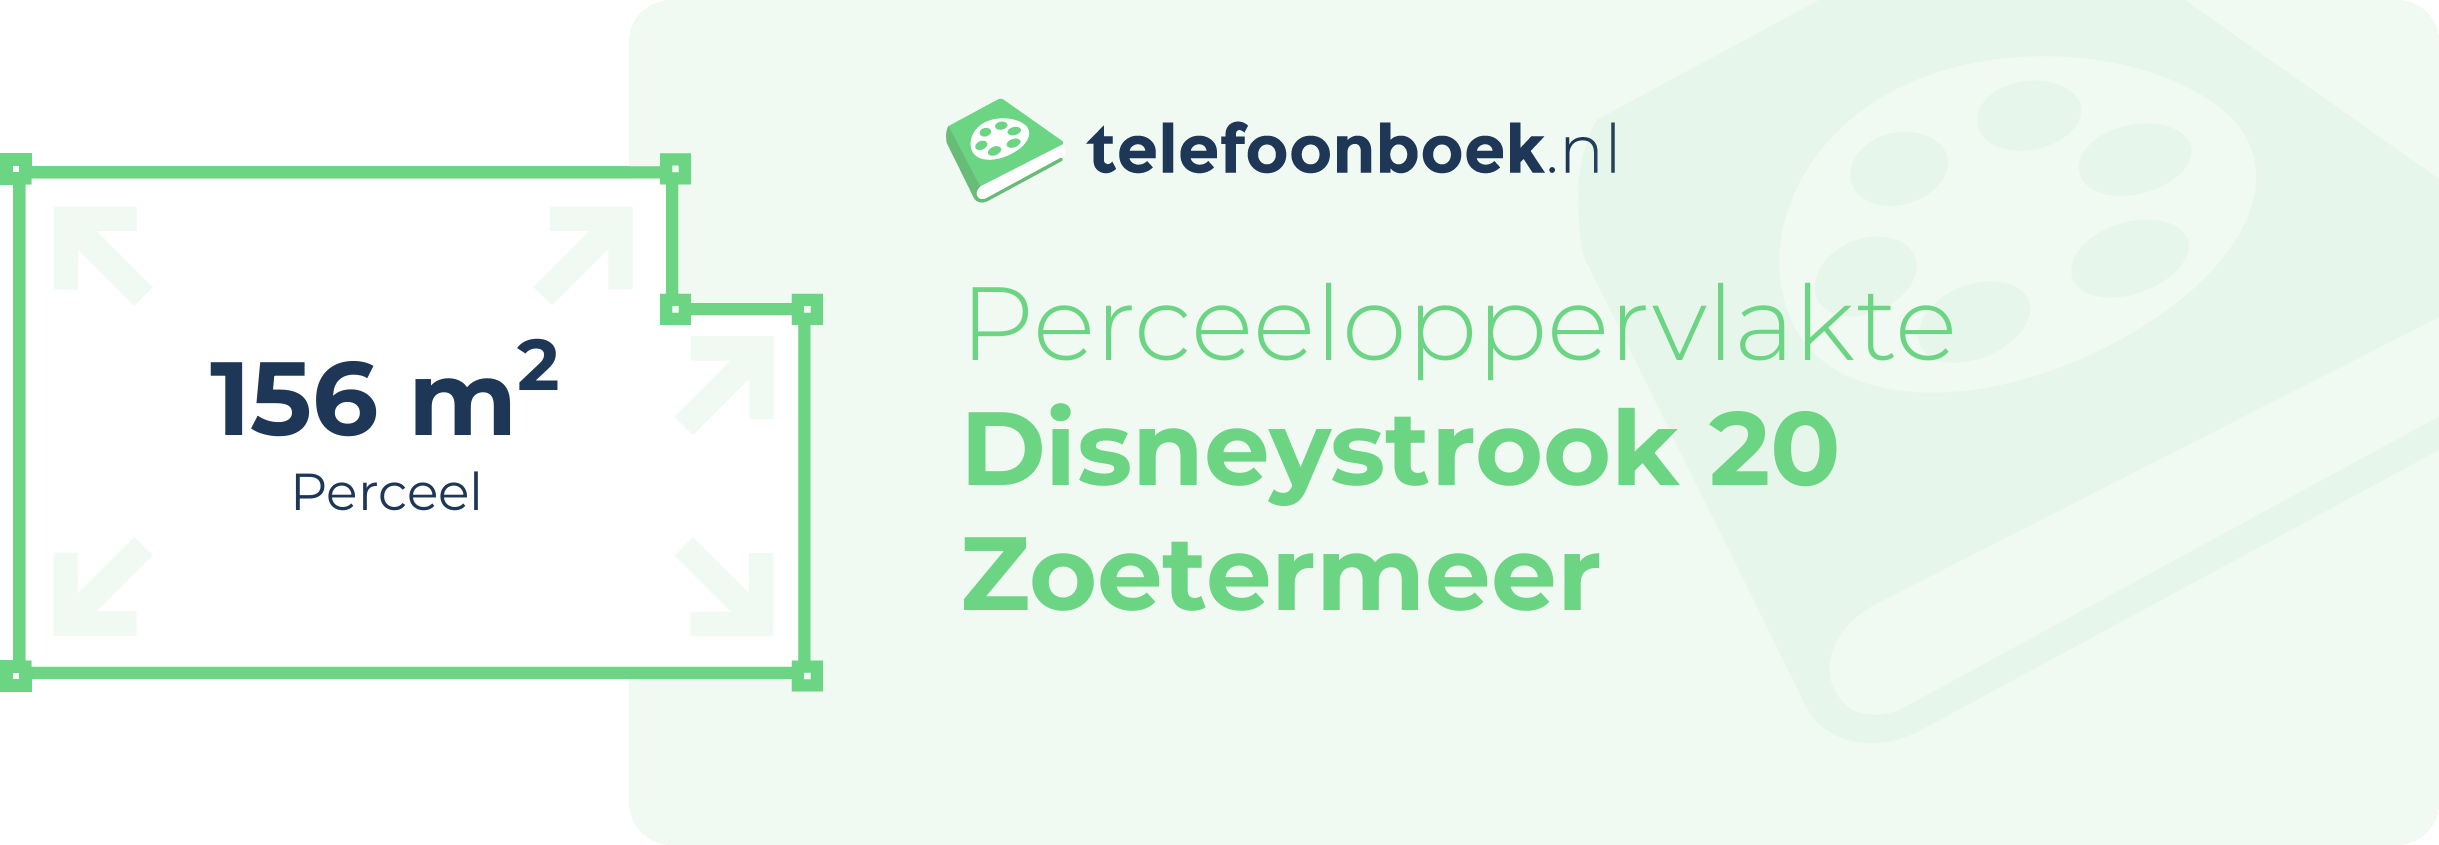 Perceeloppervlakte Disneystrook 20 Zoetermeer